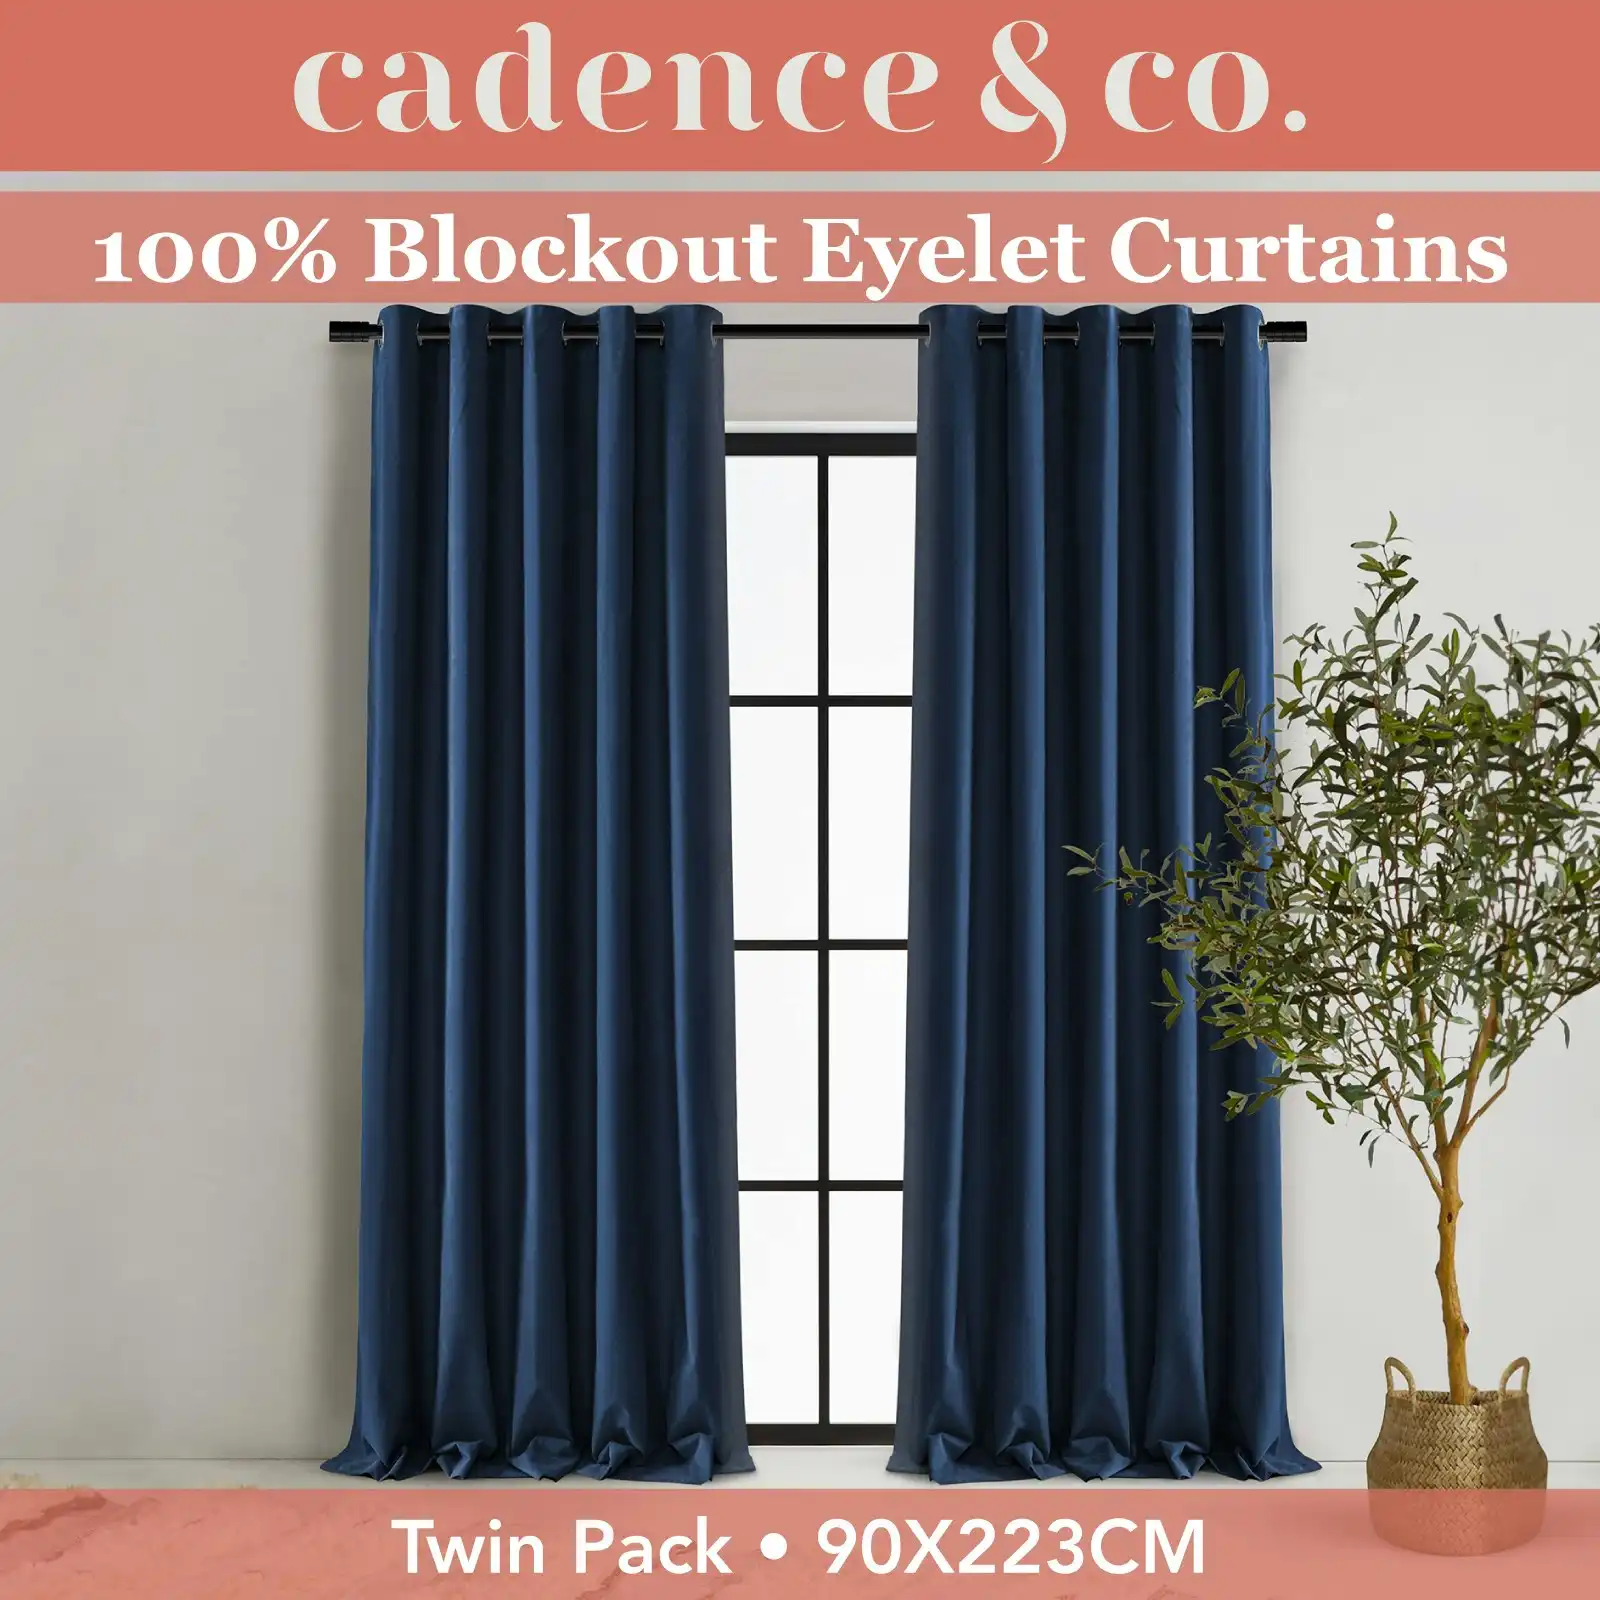 Cadence & Co. Byron Matte Velvet 100% Blockout Eyelet Curtains Twin Pack Ocean Blue 90x223cm